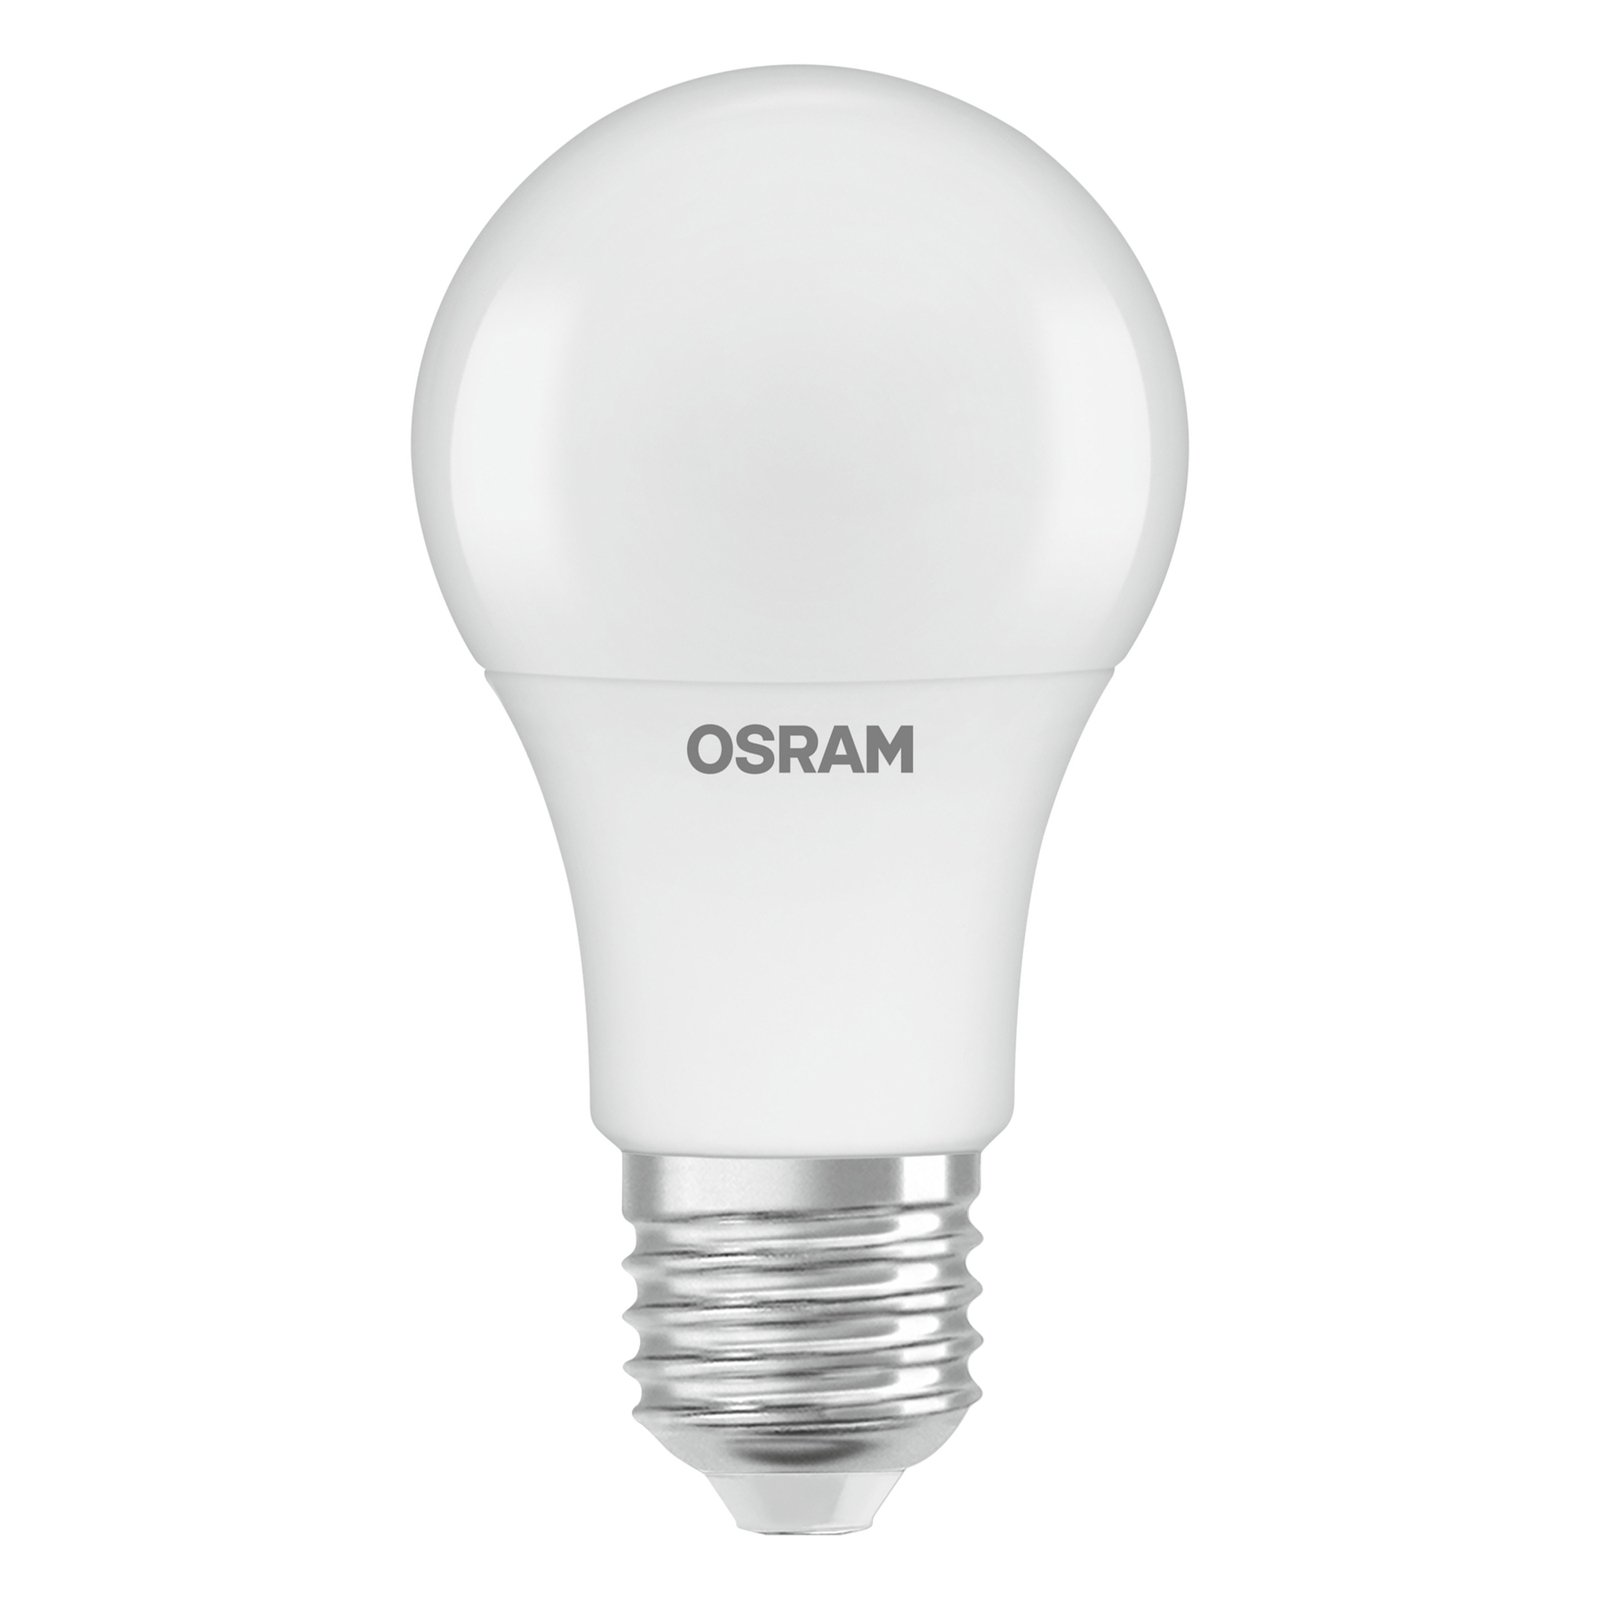 OSRAM bombilla LED E27 4,9W Star 827 470lm